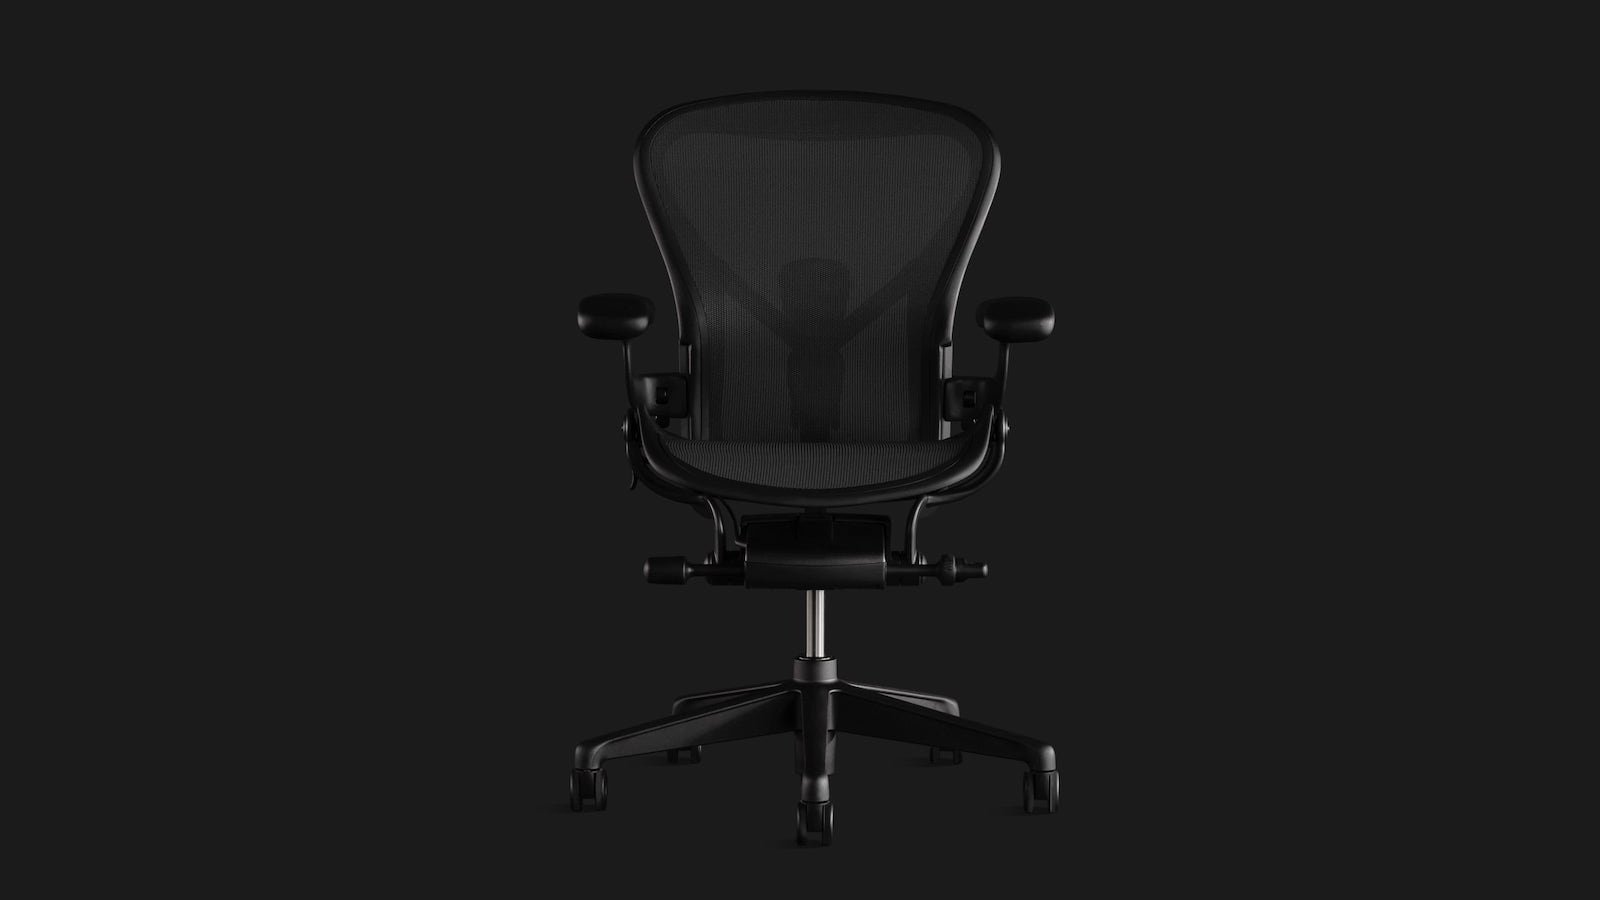 HermanMiller Aeron Chair ergonomic gaming seat has injected-molded foam